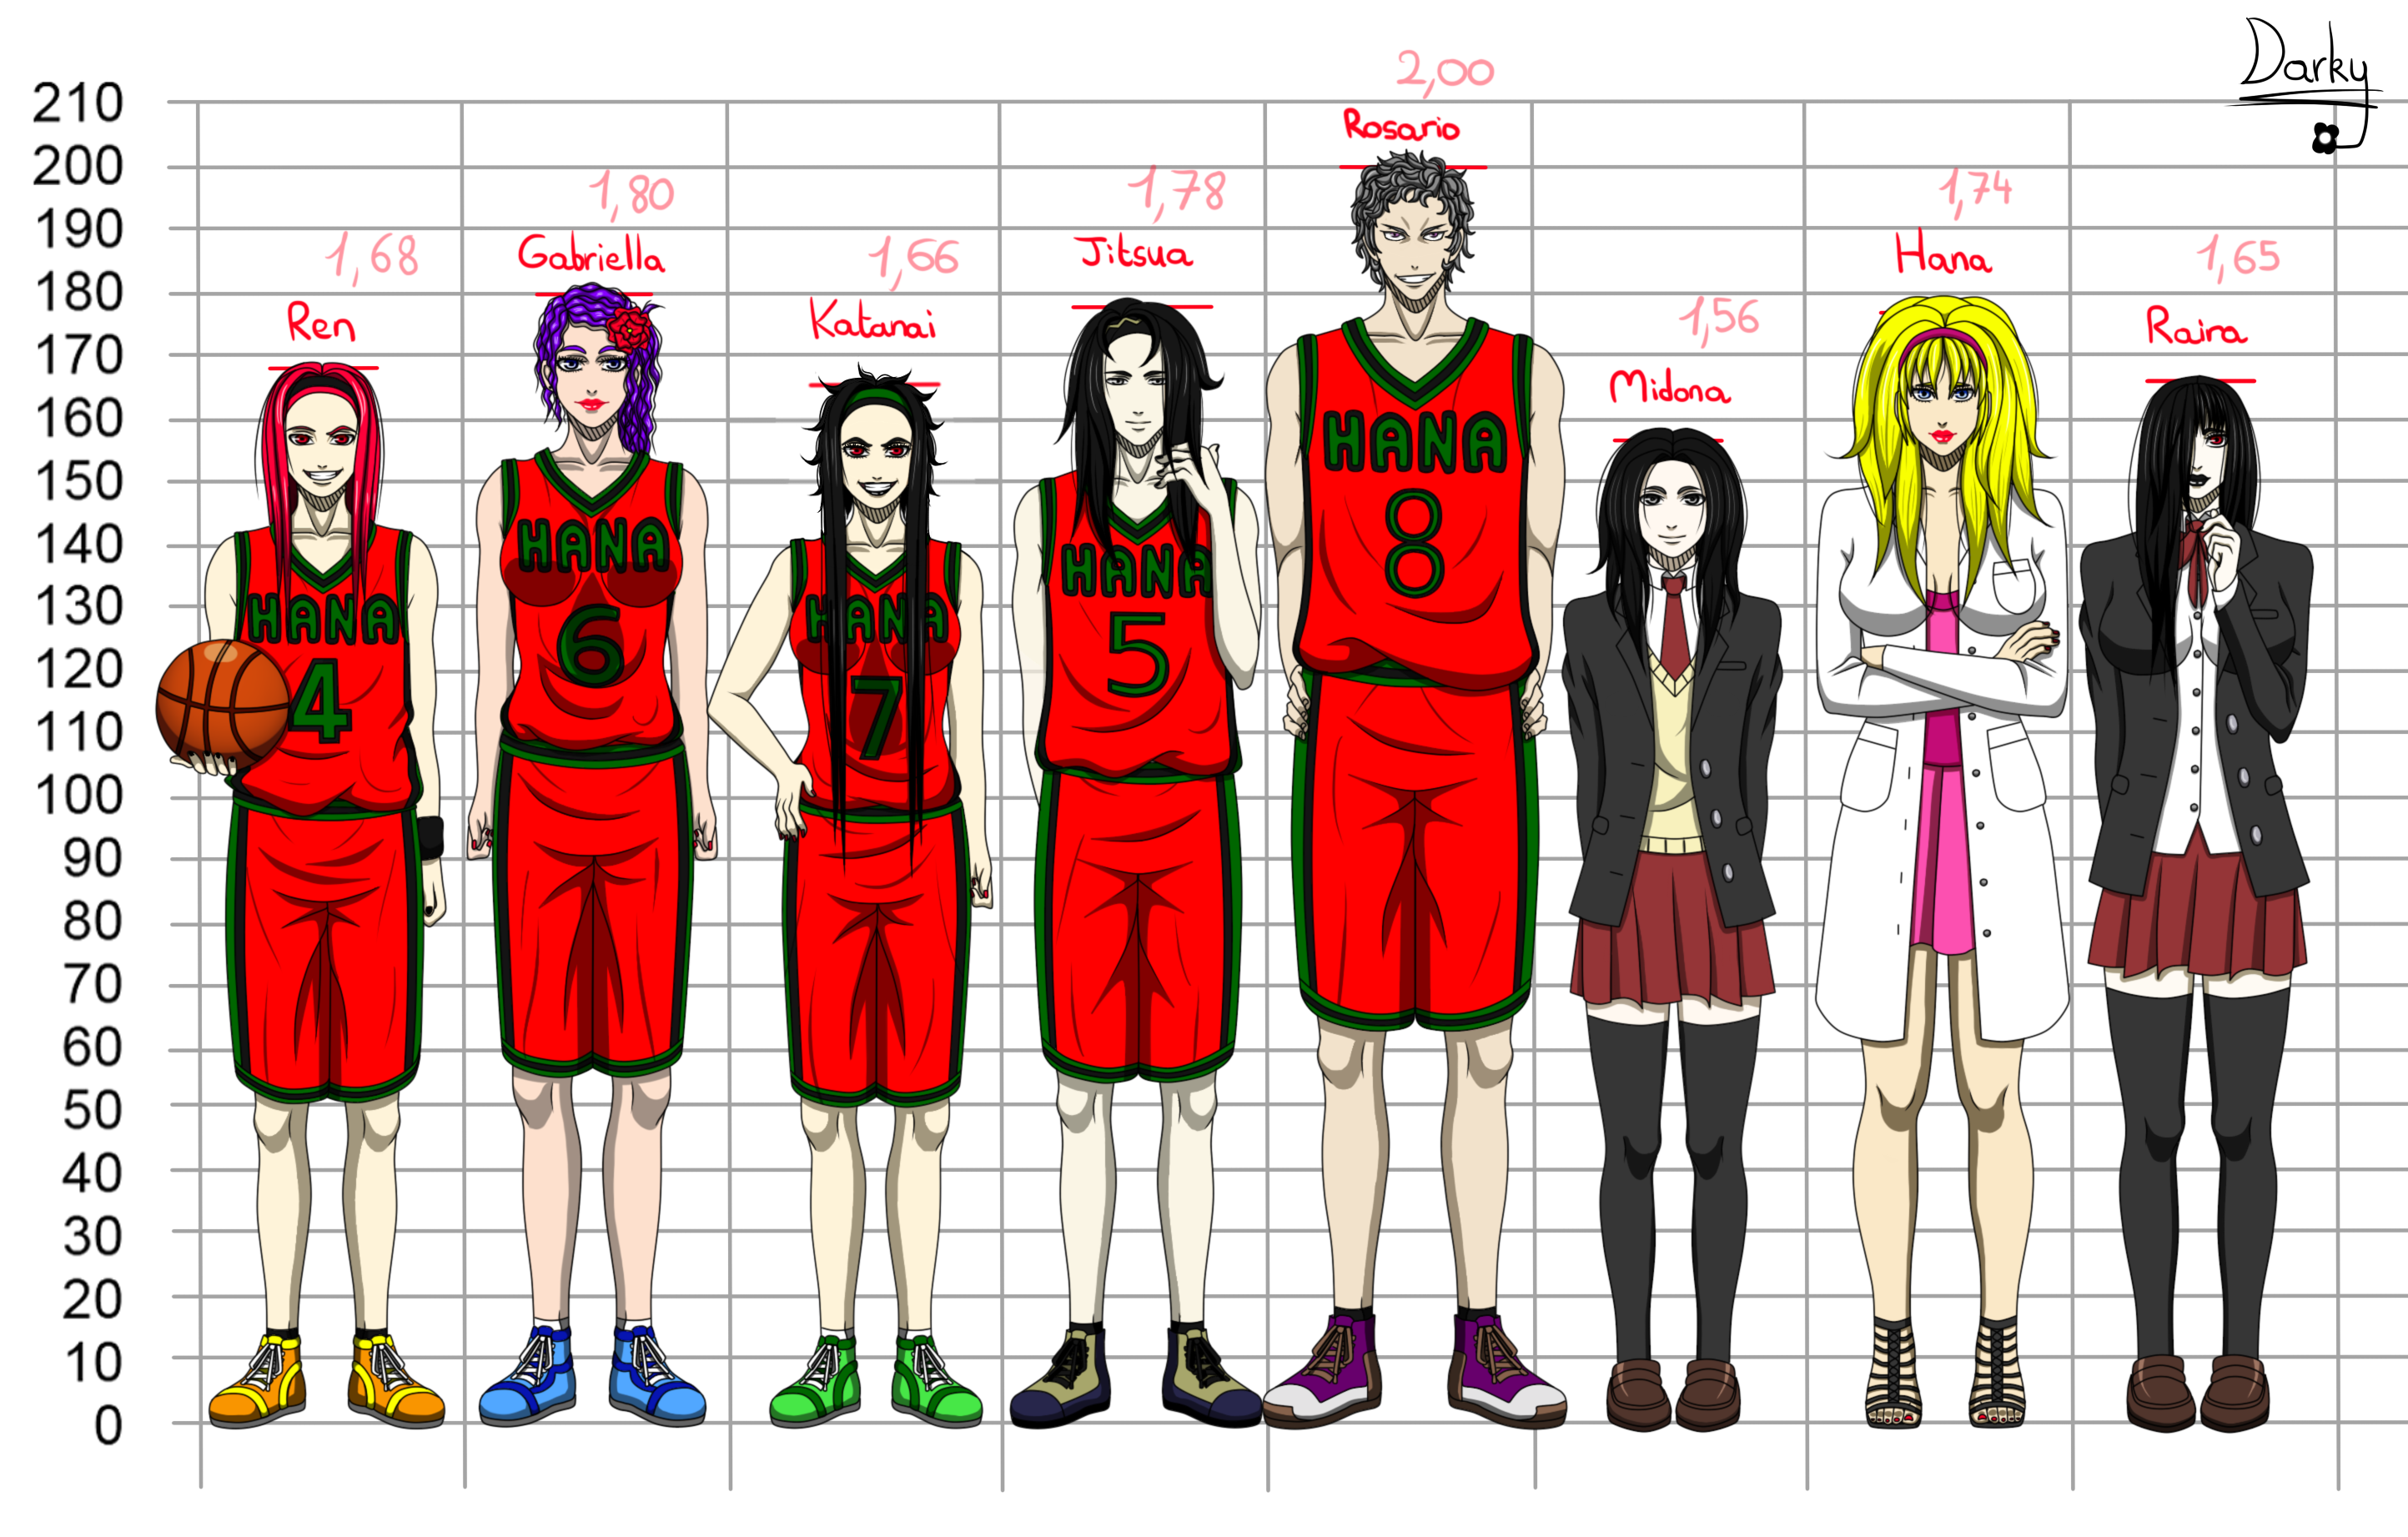 22 height. Рост персонажей баскетбол Куроко. Куроко персонажи рост. Рост персонажей баскетбол короко. Рост игроков баскетбол Куроко.